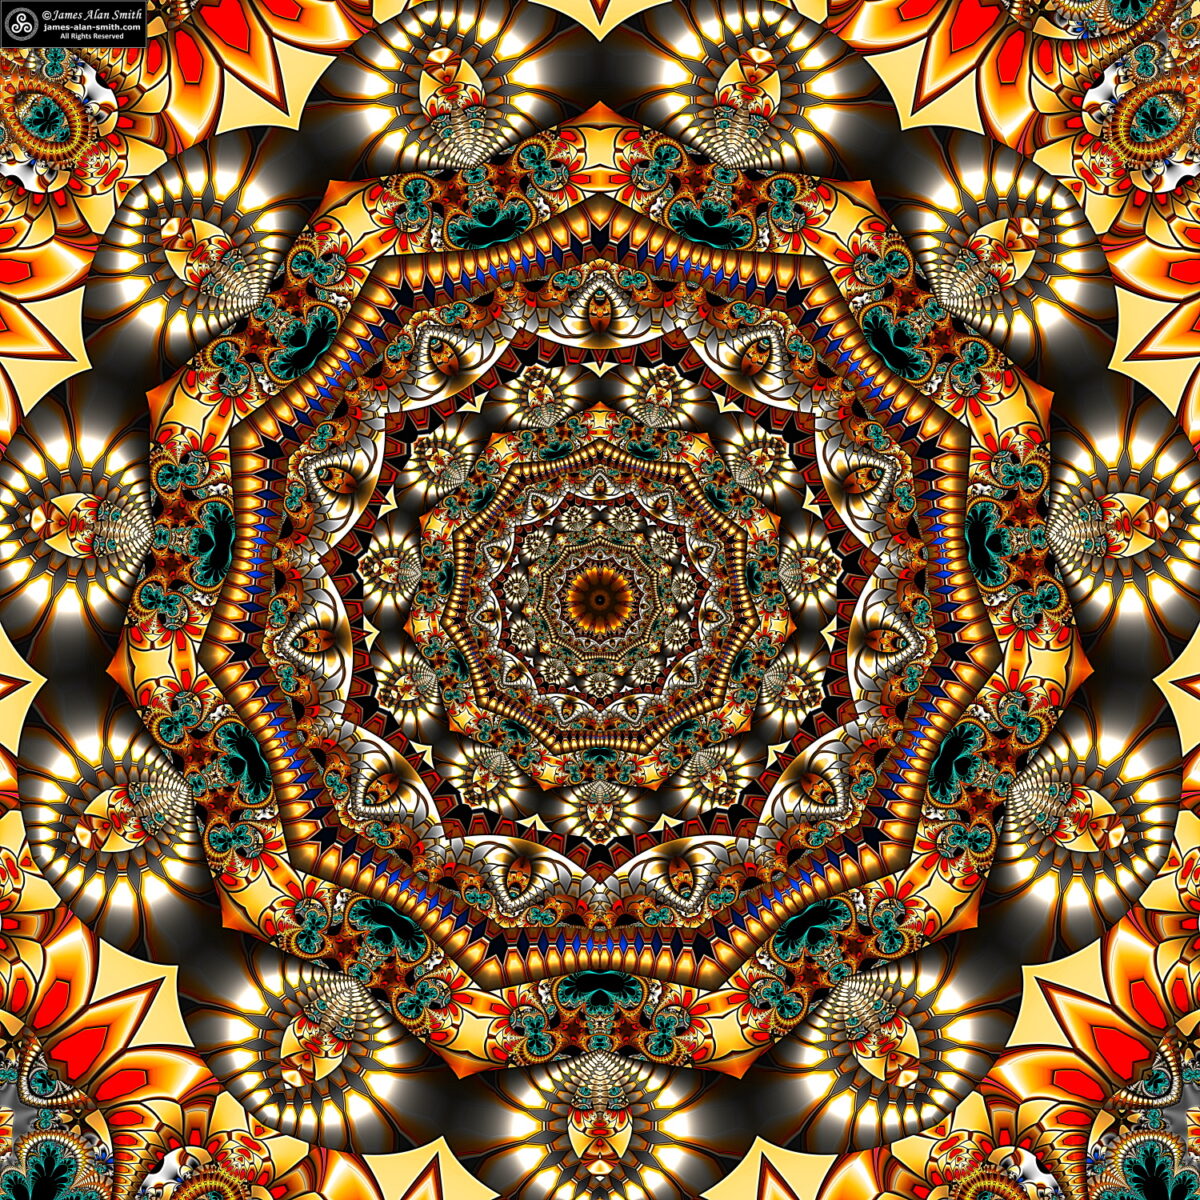 Unusual Mandala Series #050922: Artwork by James Alan Smith